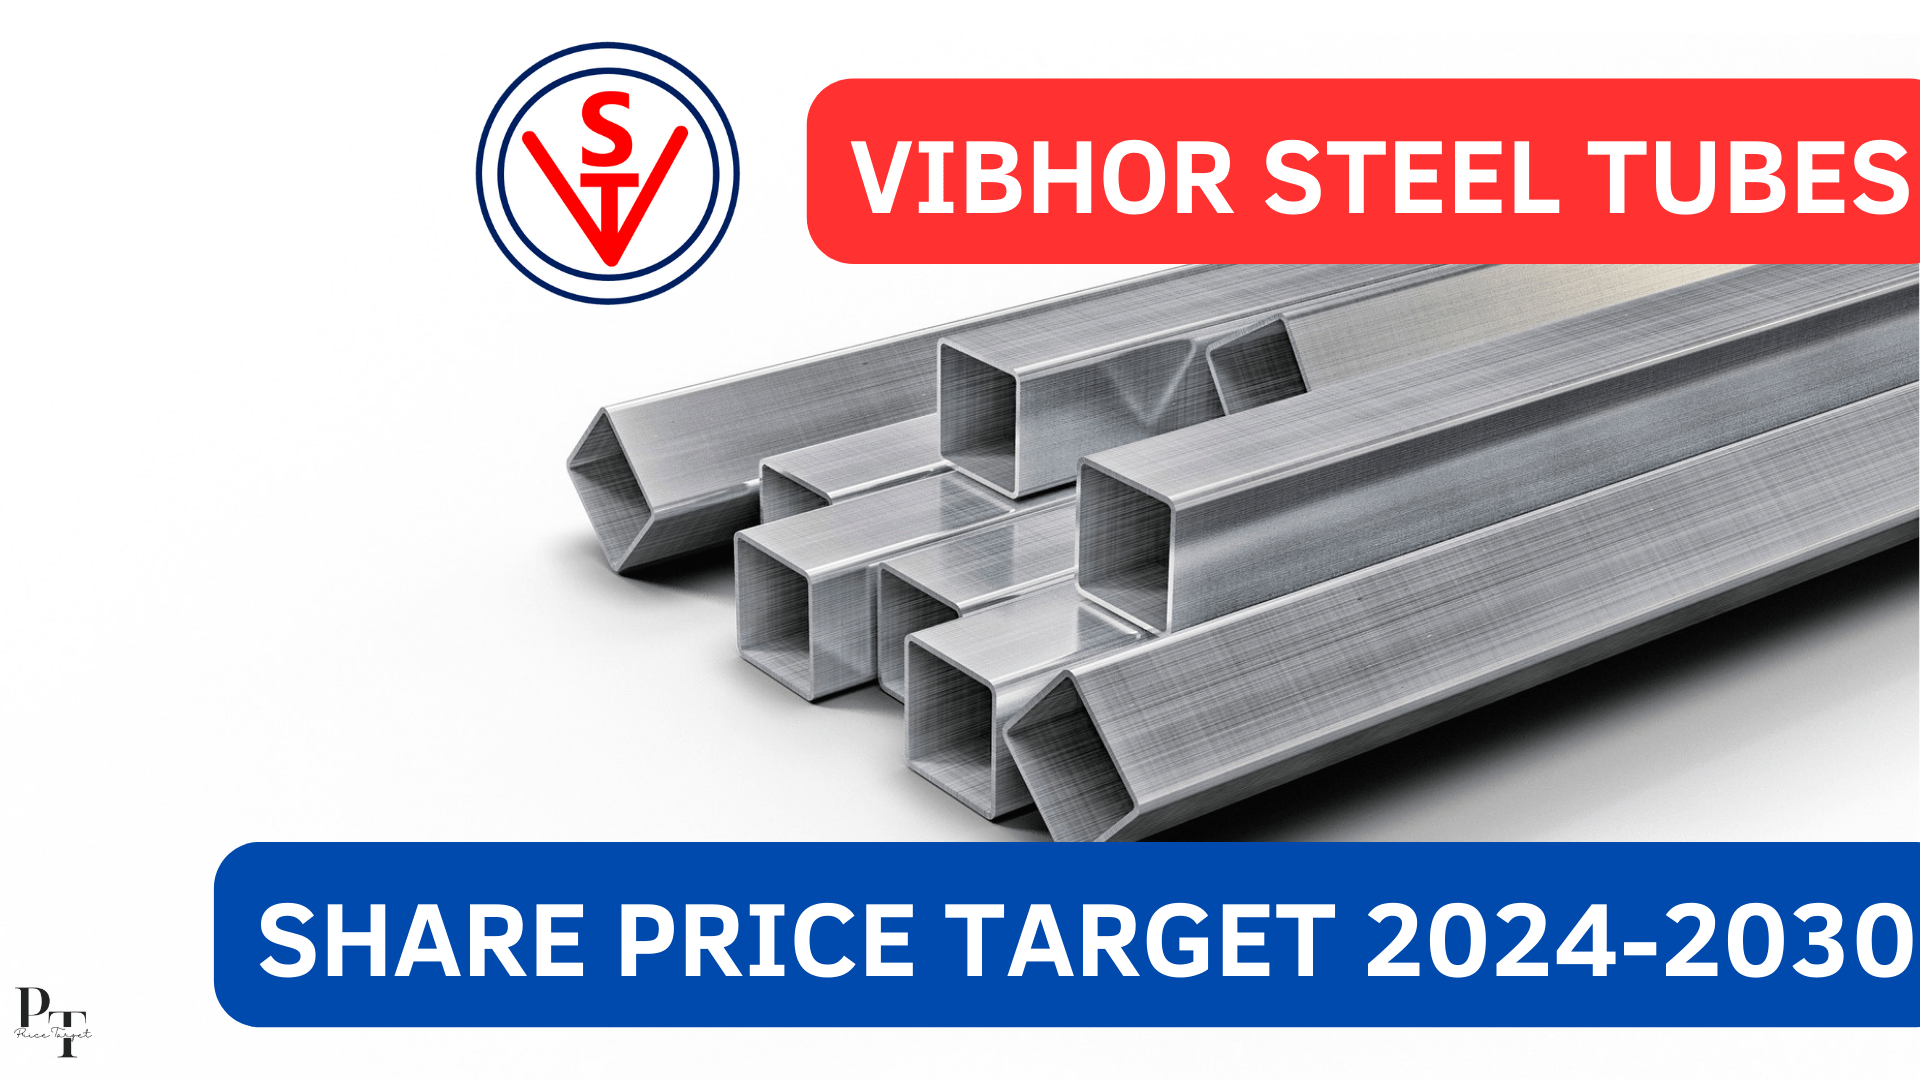 Vibhor Steel Tubes Share Price Target